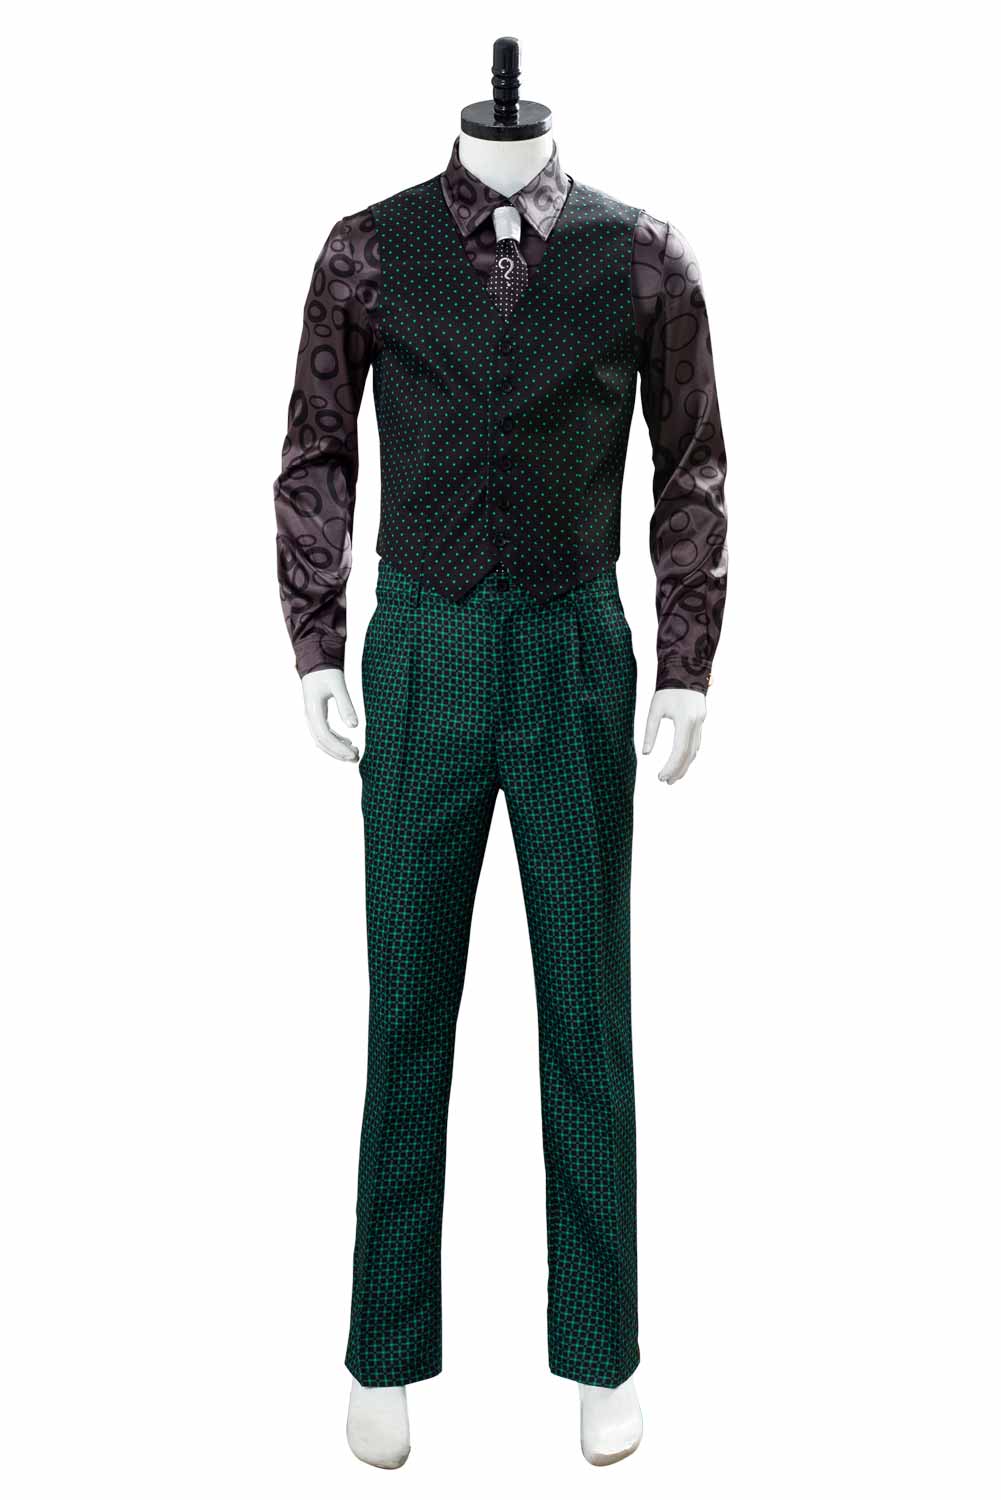 Gotham 5 Edward Nygma Riddler Kostüm Cosplay Kostüm Grün Set